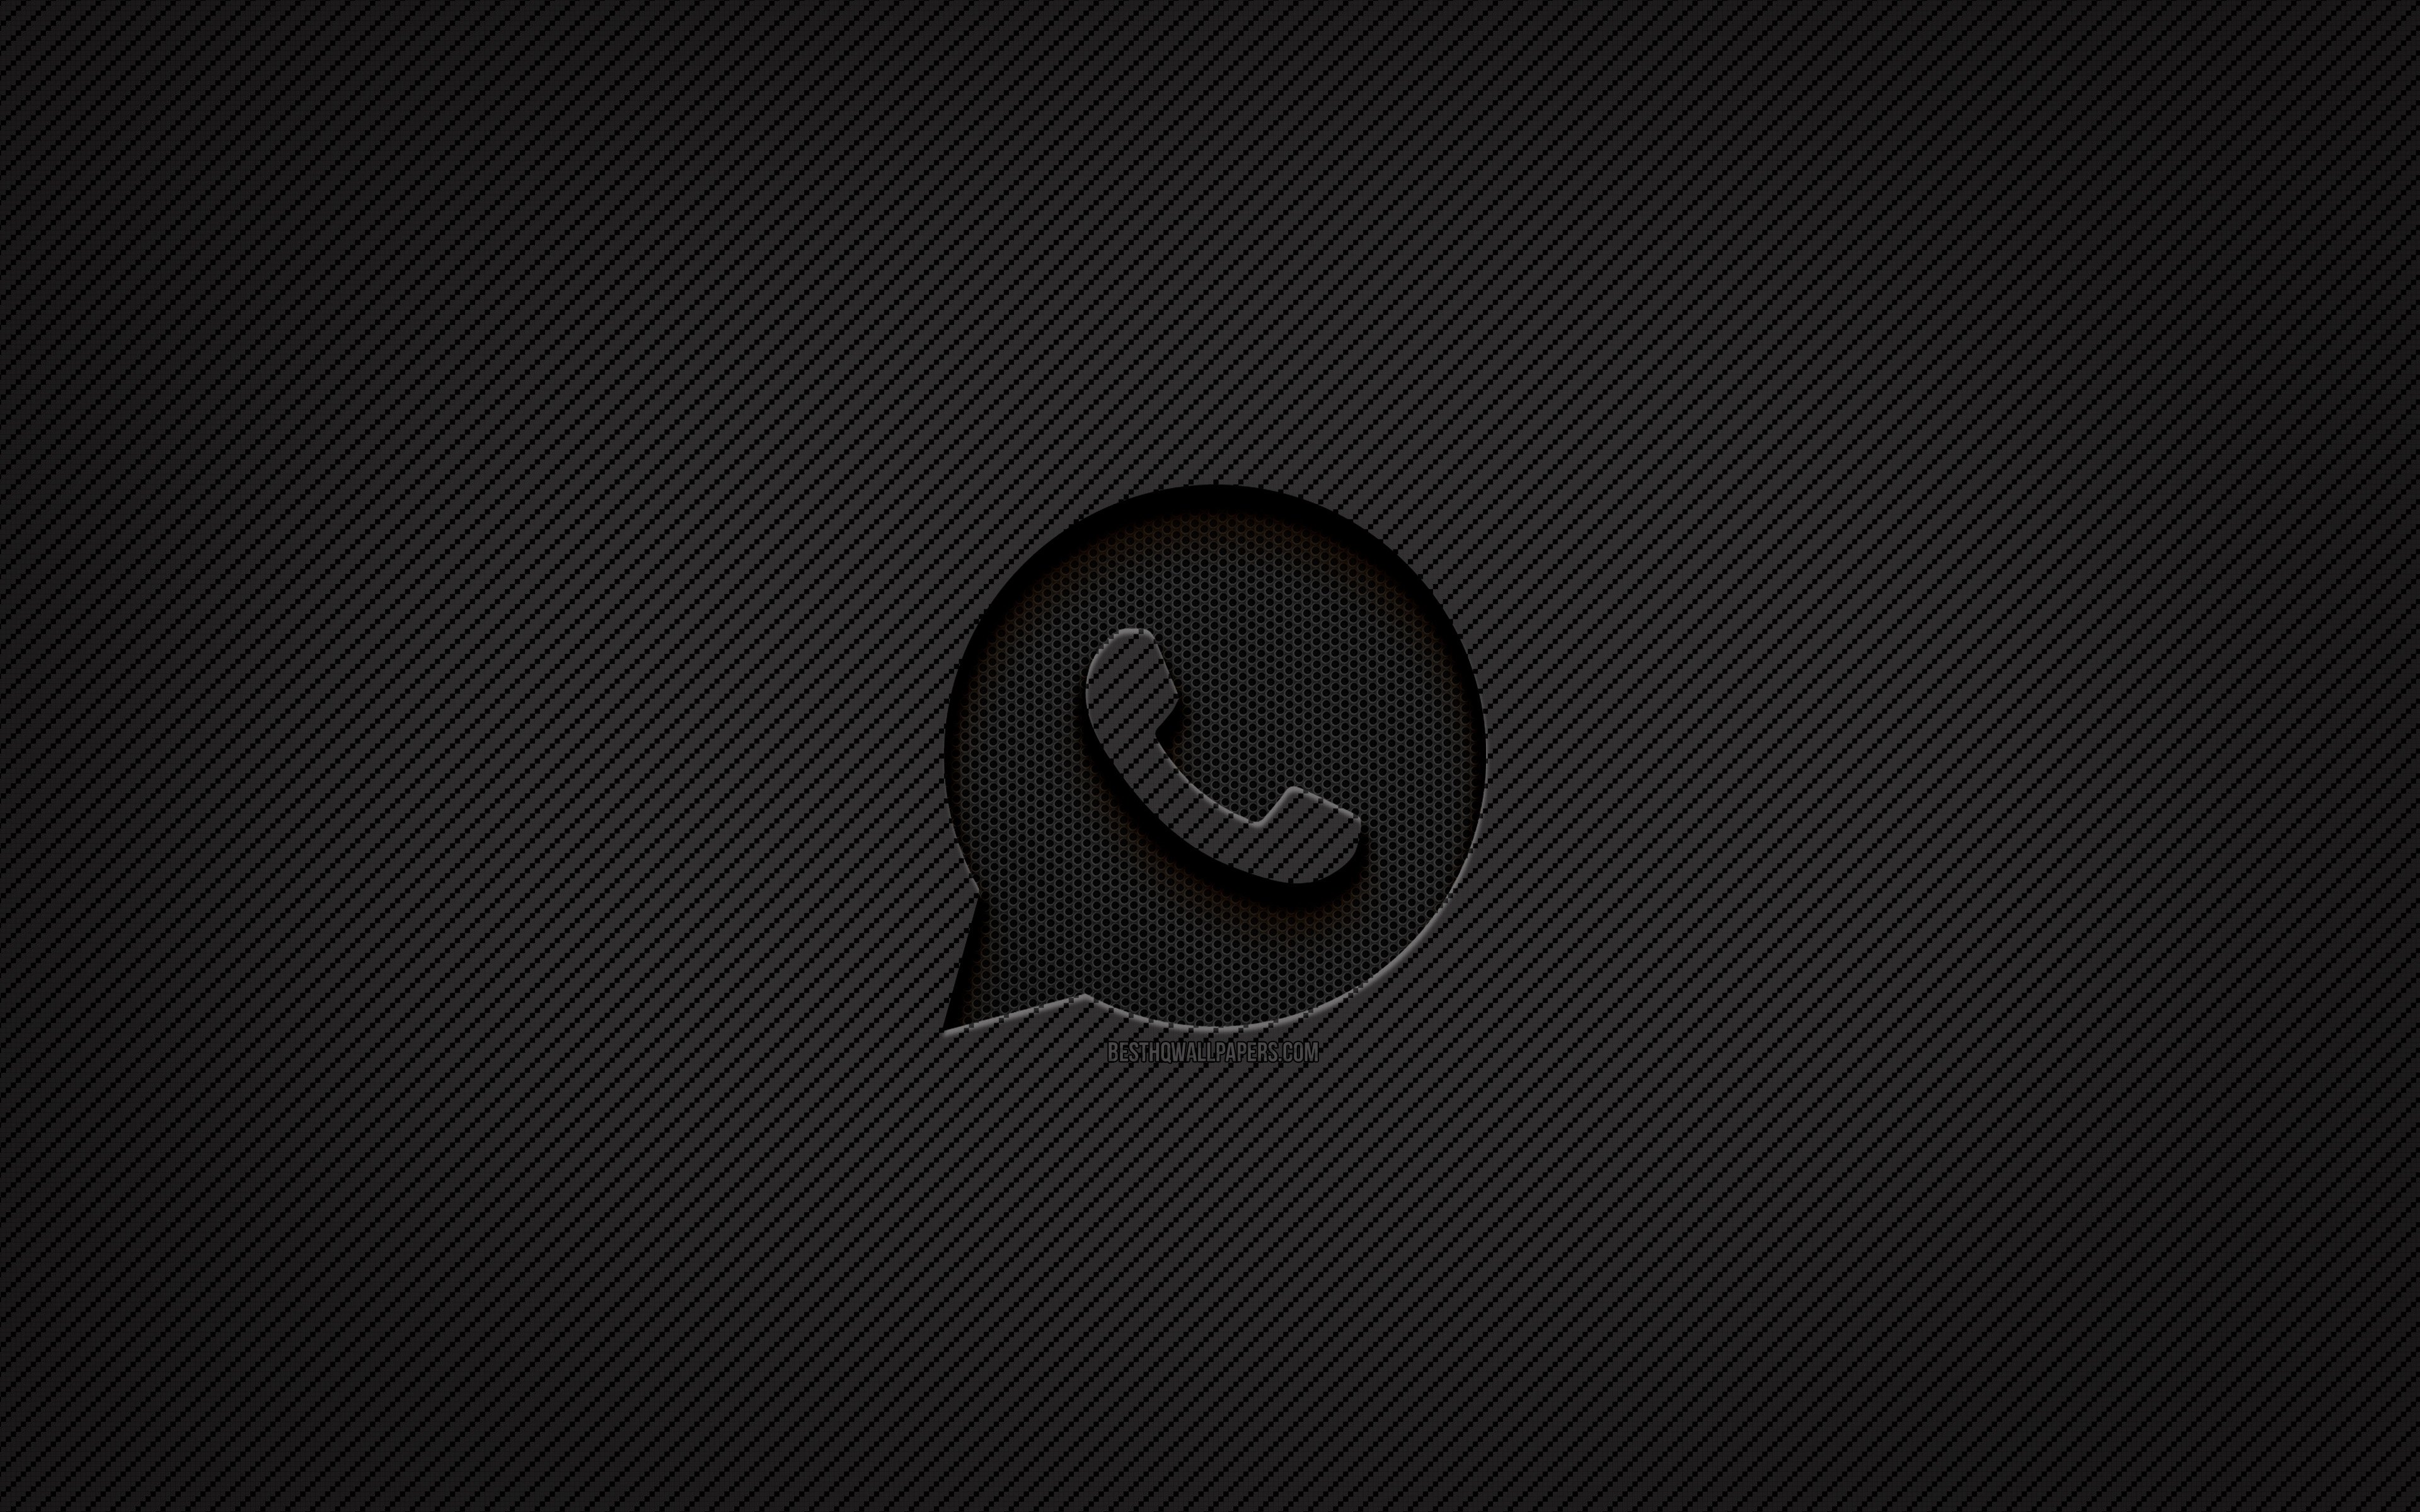 Original Black Round Square WhatsApp Web Icon Stock Vector by ©bigxteq  168222598